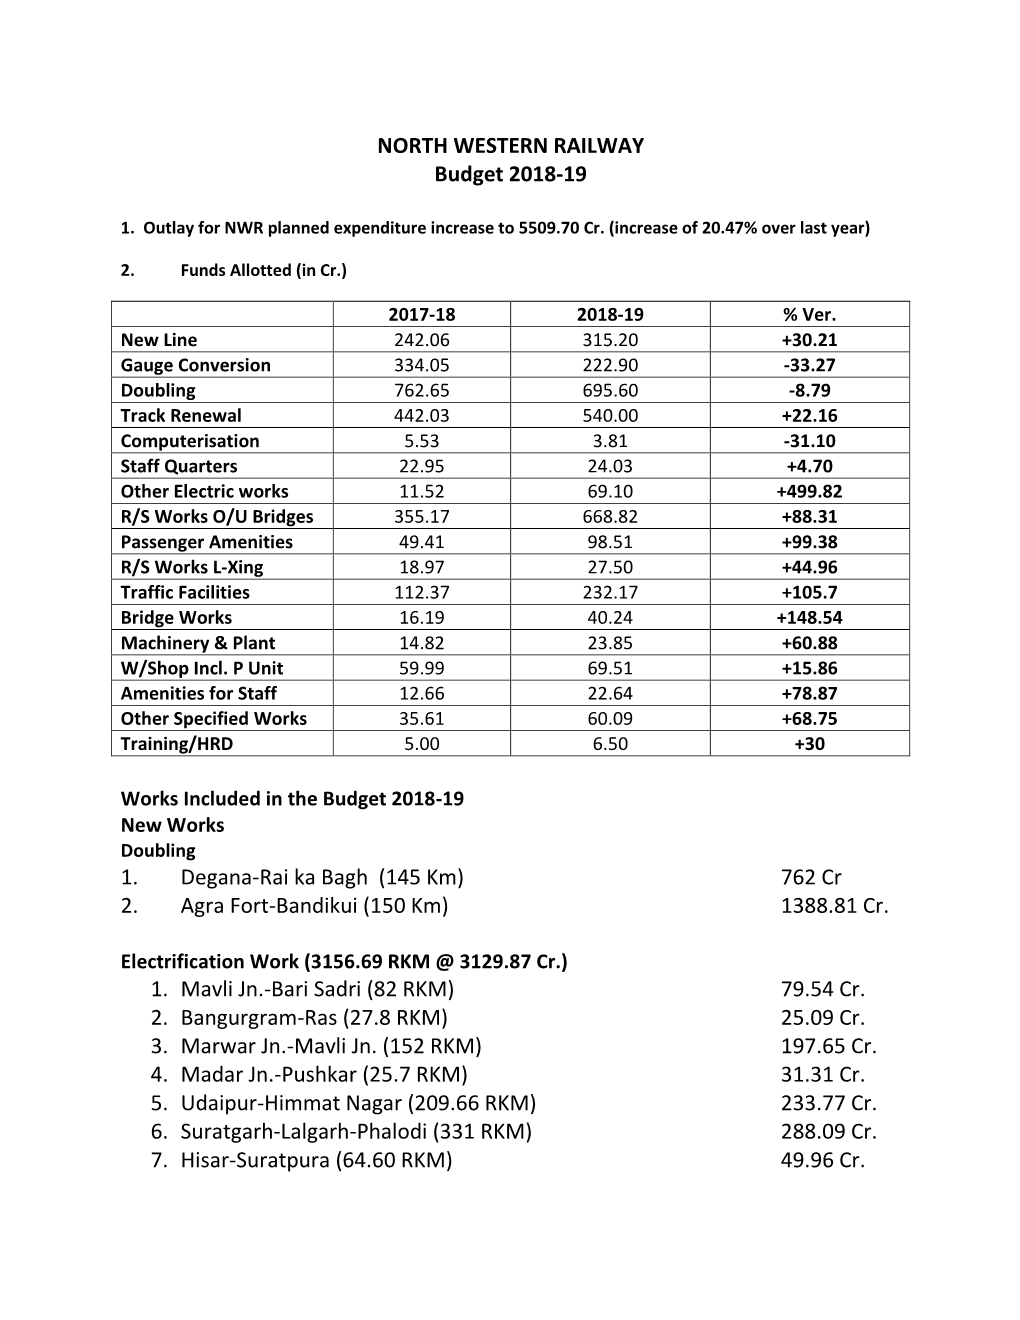 NORTH WESTERN RAILWAY Budget 2018-19 1. Degana-Rai Ka Bagh (145 Km) 762 Cr 2. Agra Fort-Bandikui (150 Km) 1388.81 Cr. 1. Mavl